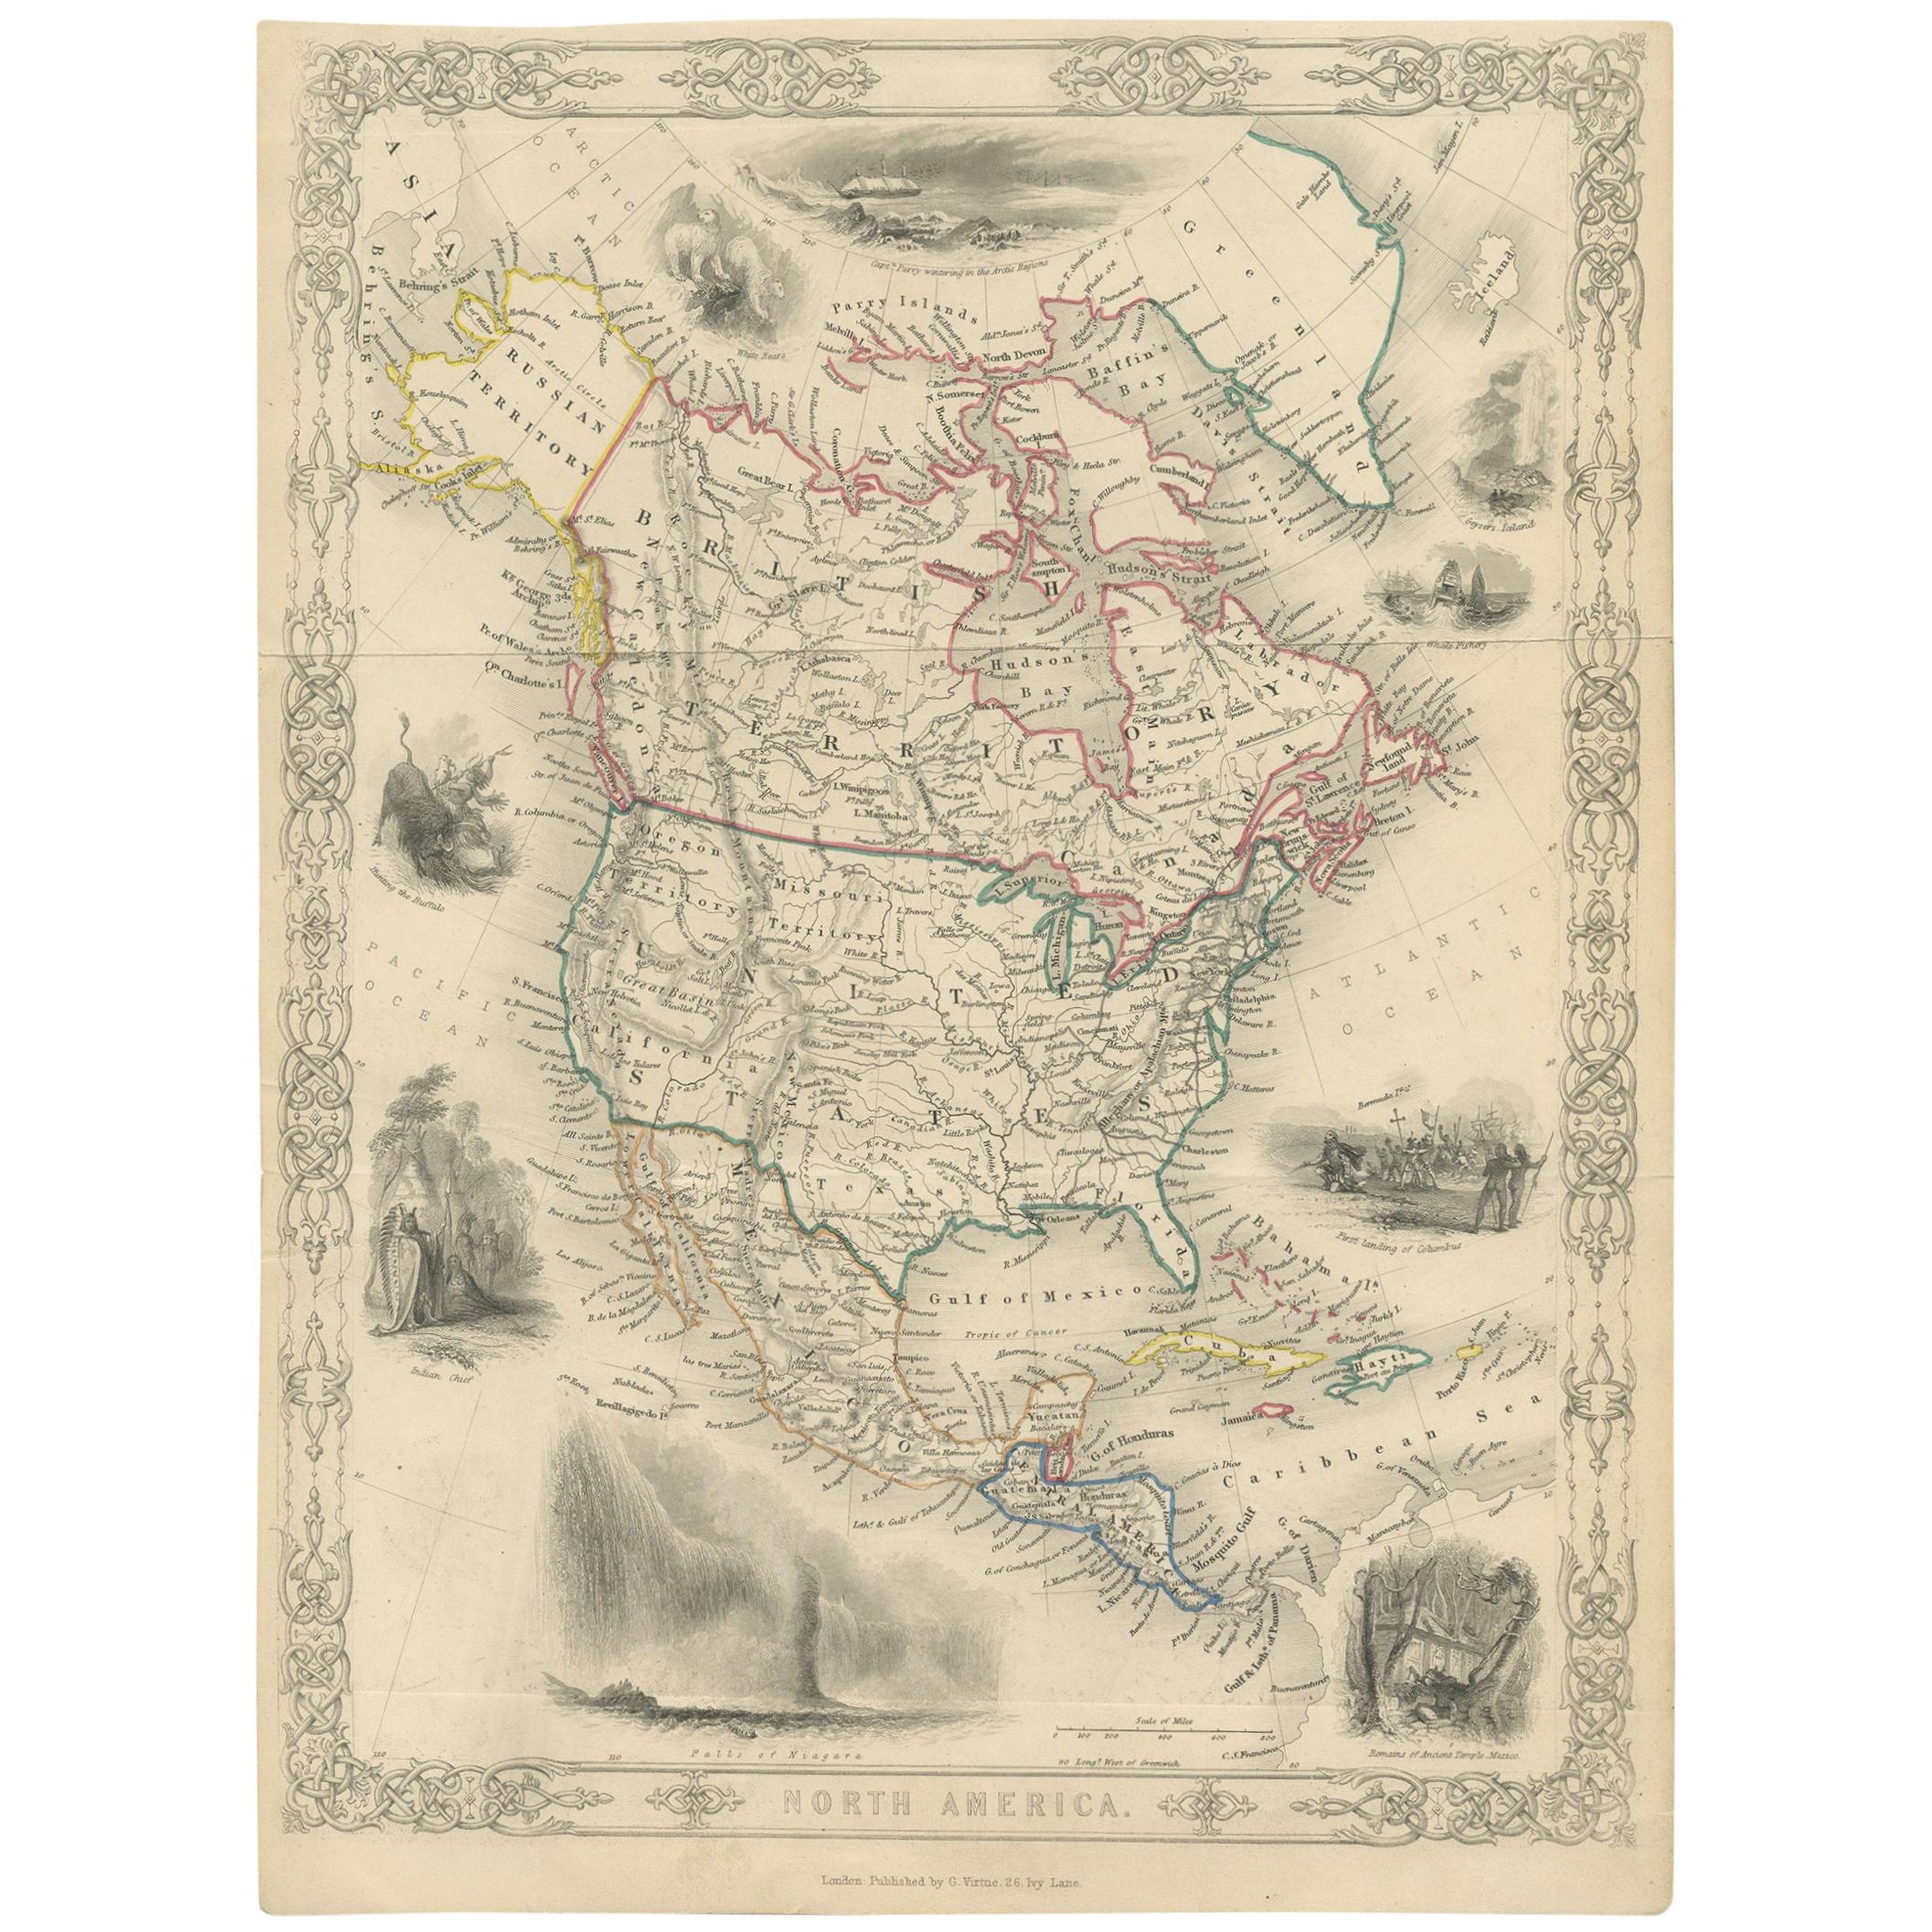 Decorative Antique Map of North America, circa 1860